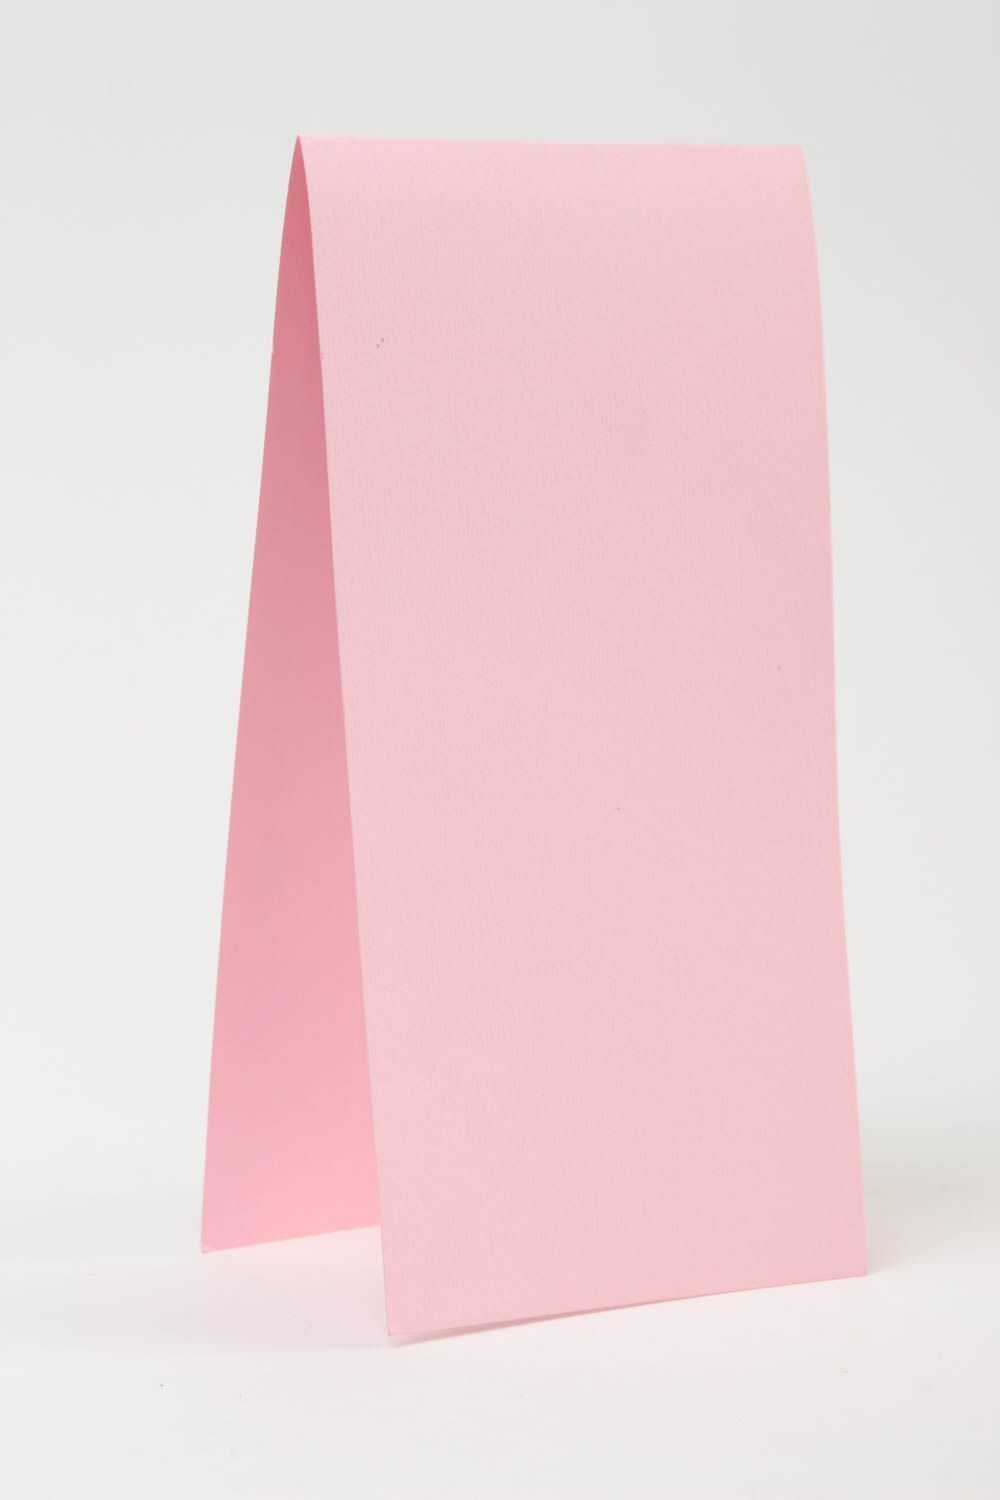 Handmade schöne Grusskarten Scrapbook Karten Papier Karten bunt rosa modisch foto 4